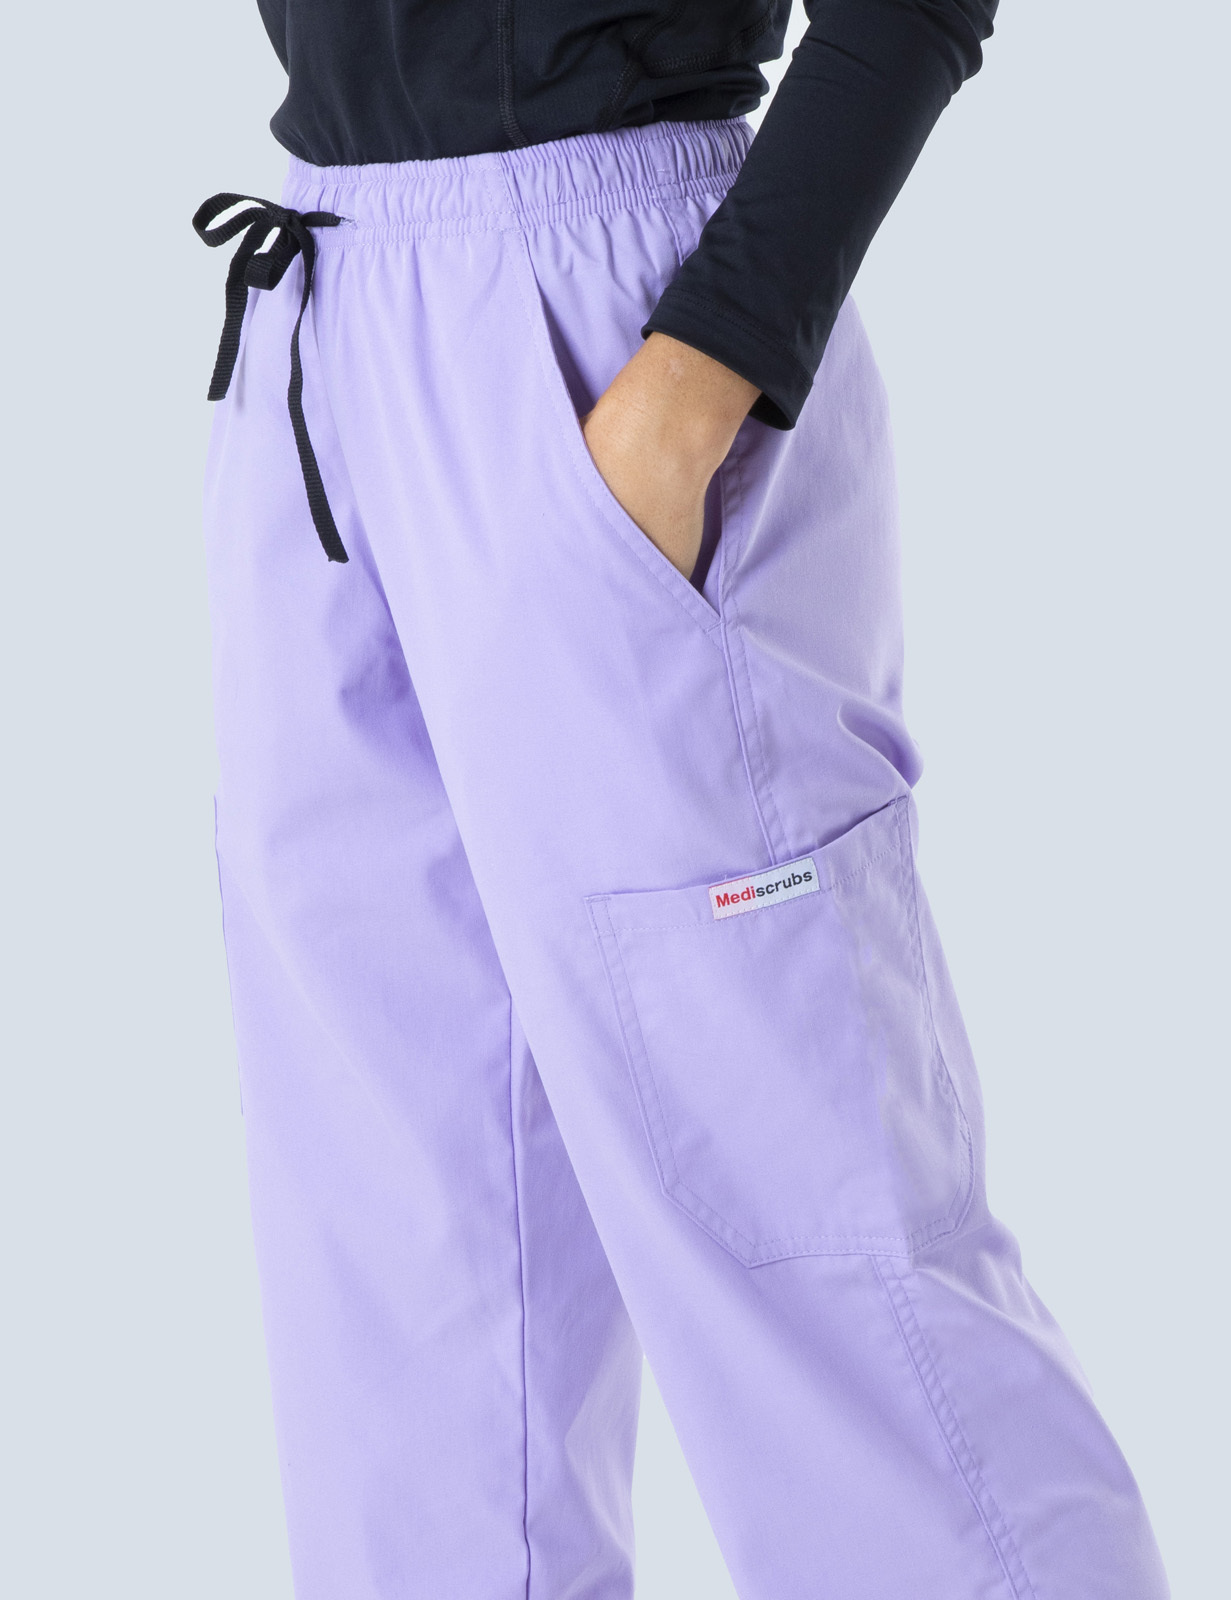 Women's Cargo Performance Pants - Lilac - 2X Large